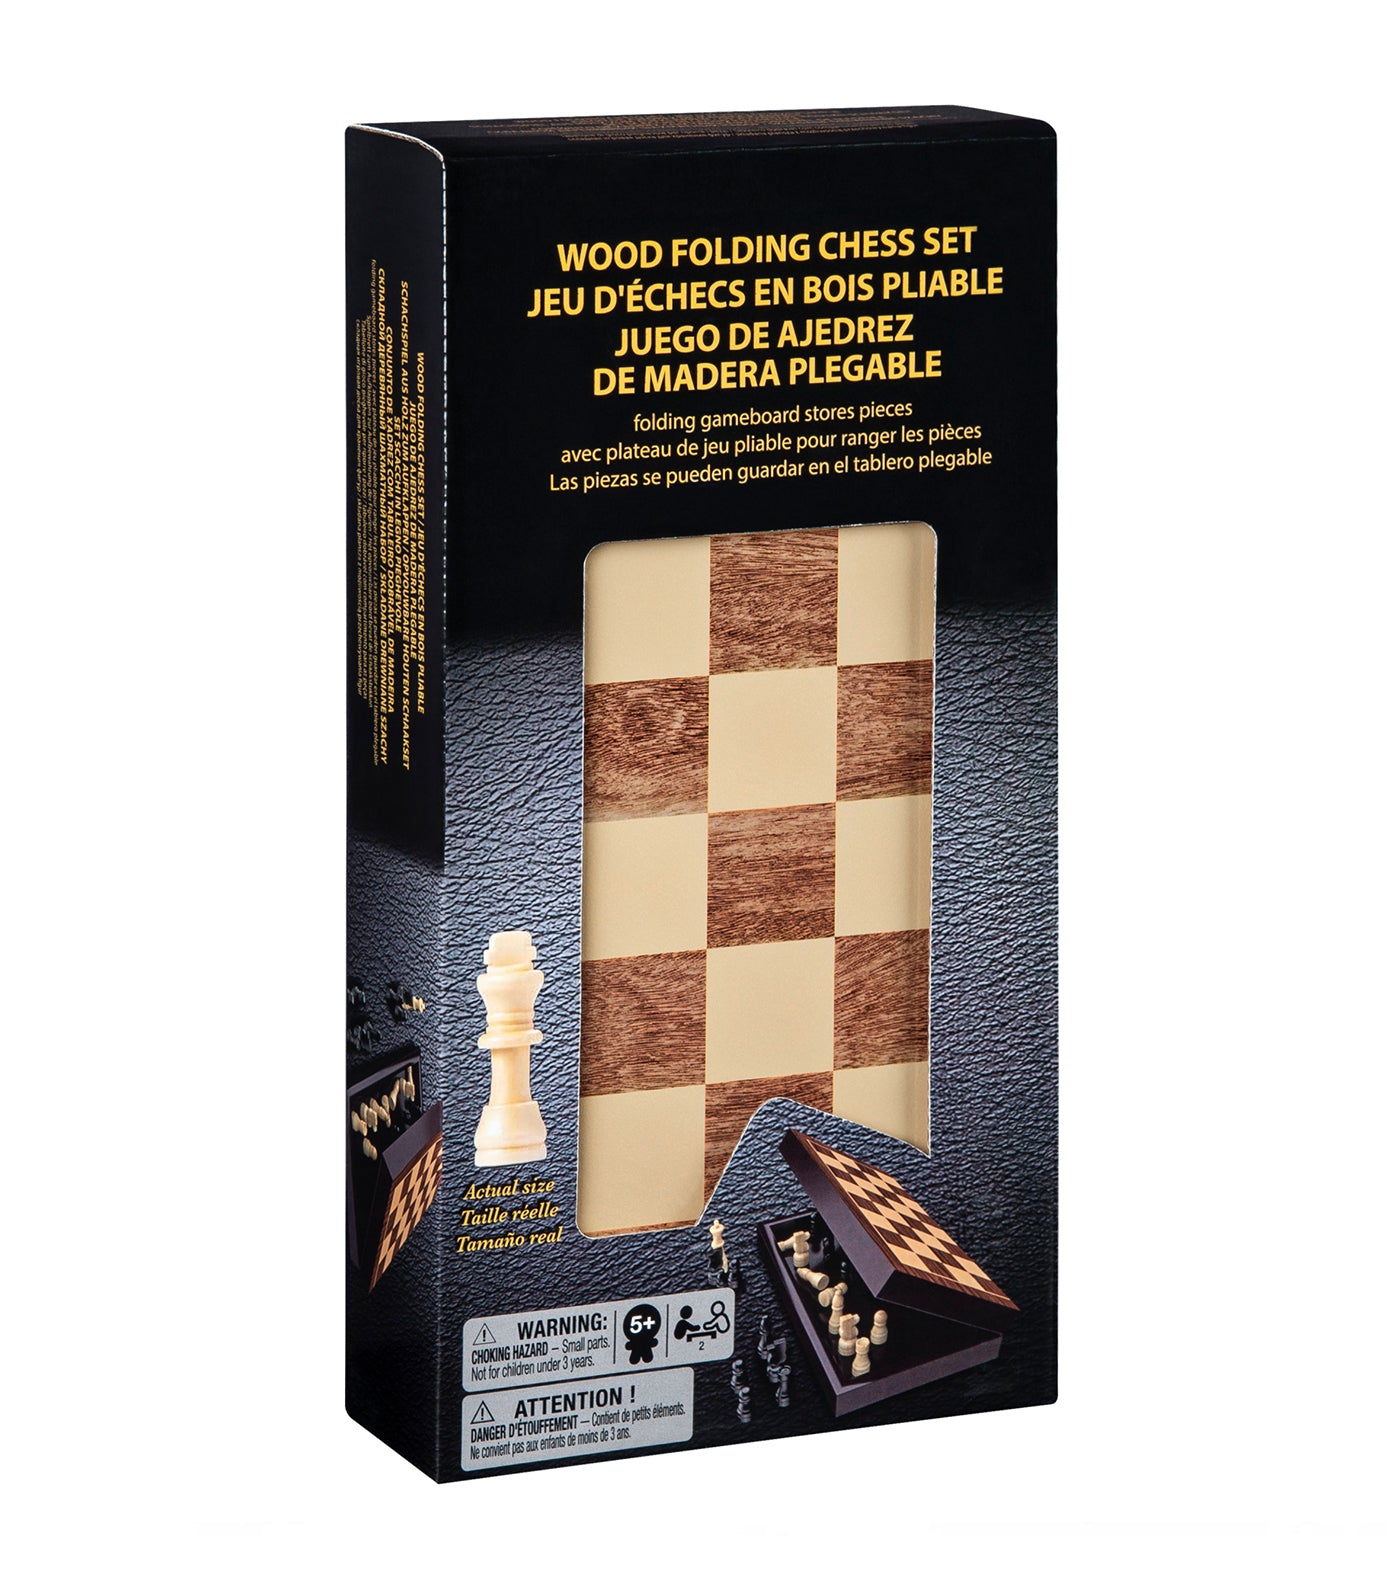 Cardinal Premium Wood Chess Board, Age 6+